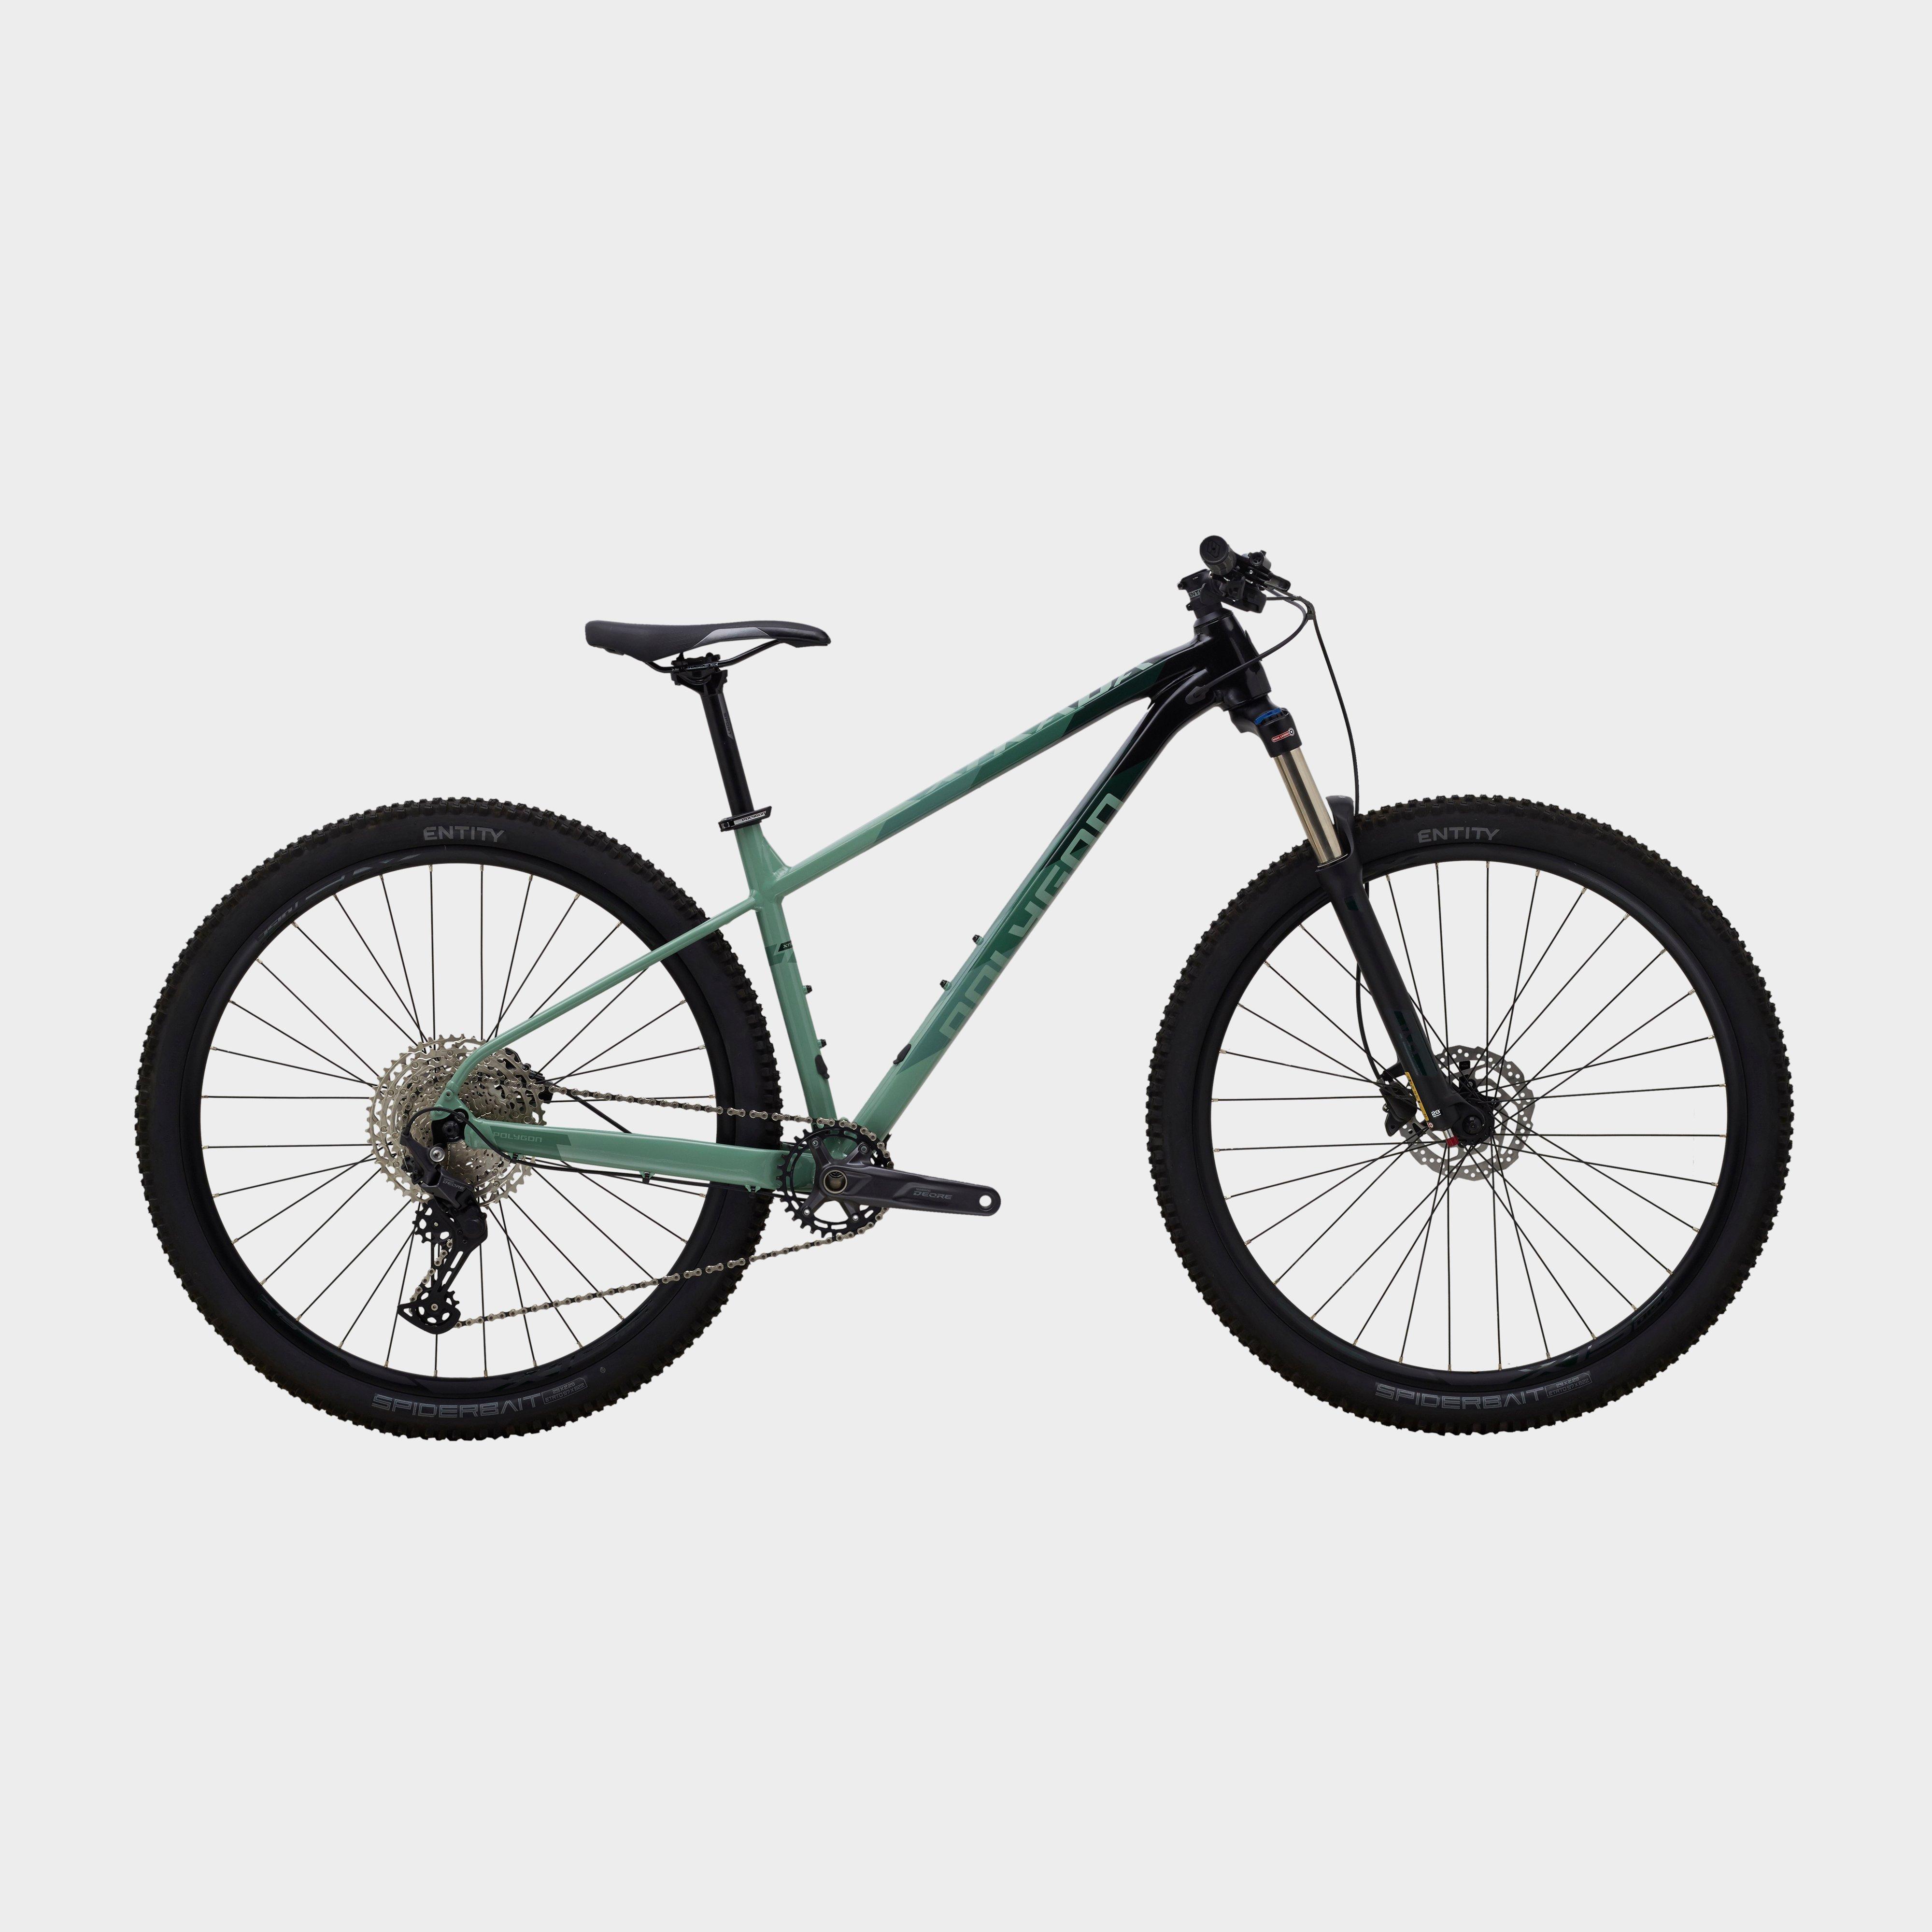 Polygon Xtrada 6 27.5 Mountain Bike - Green/black  Green/black